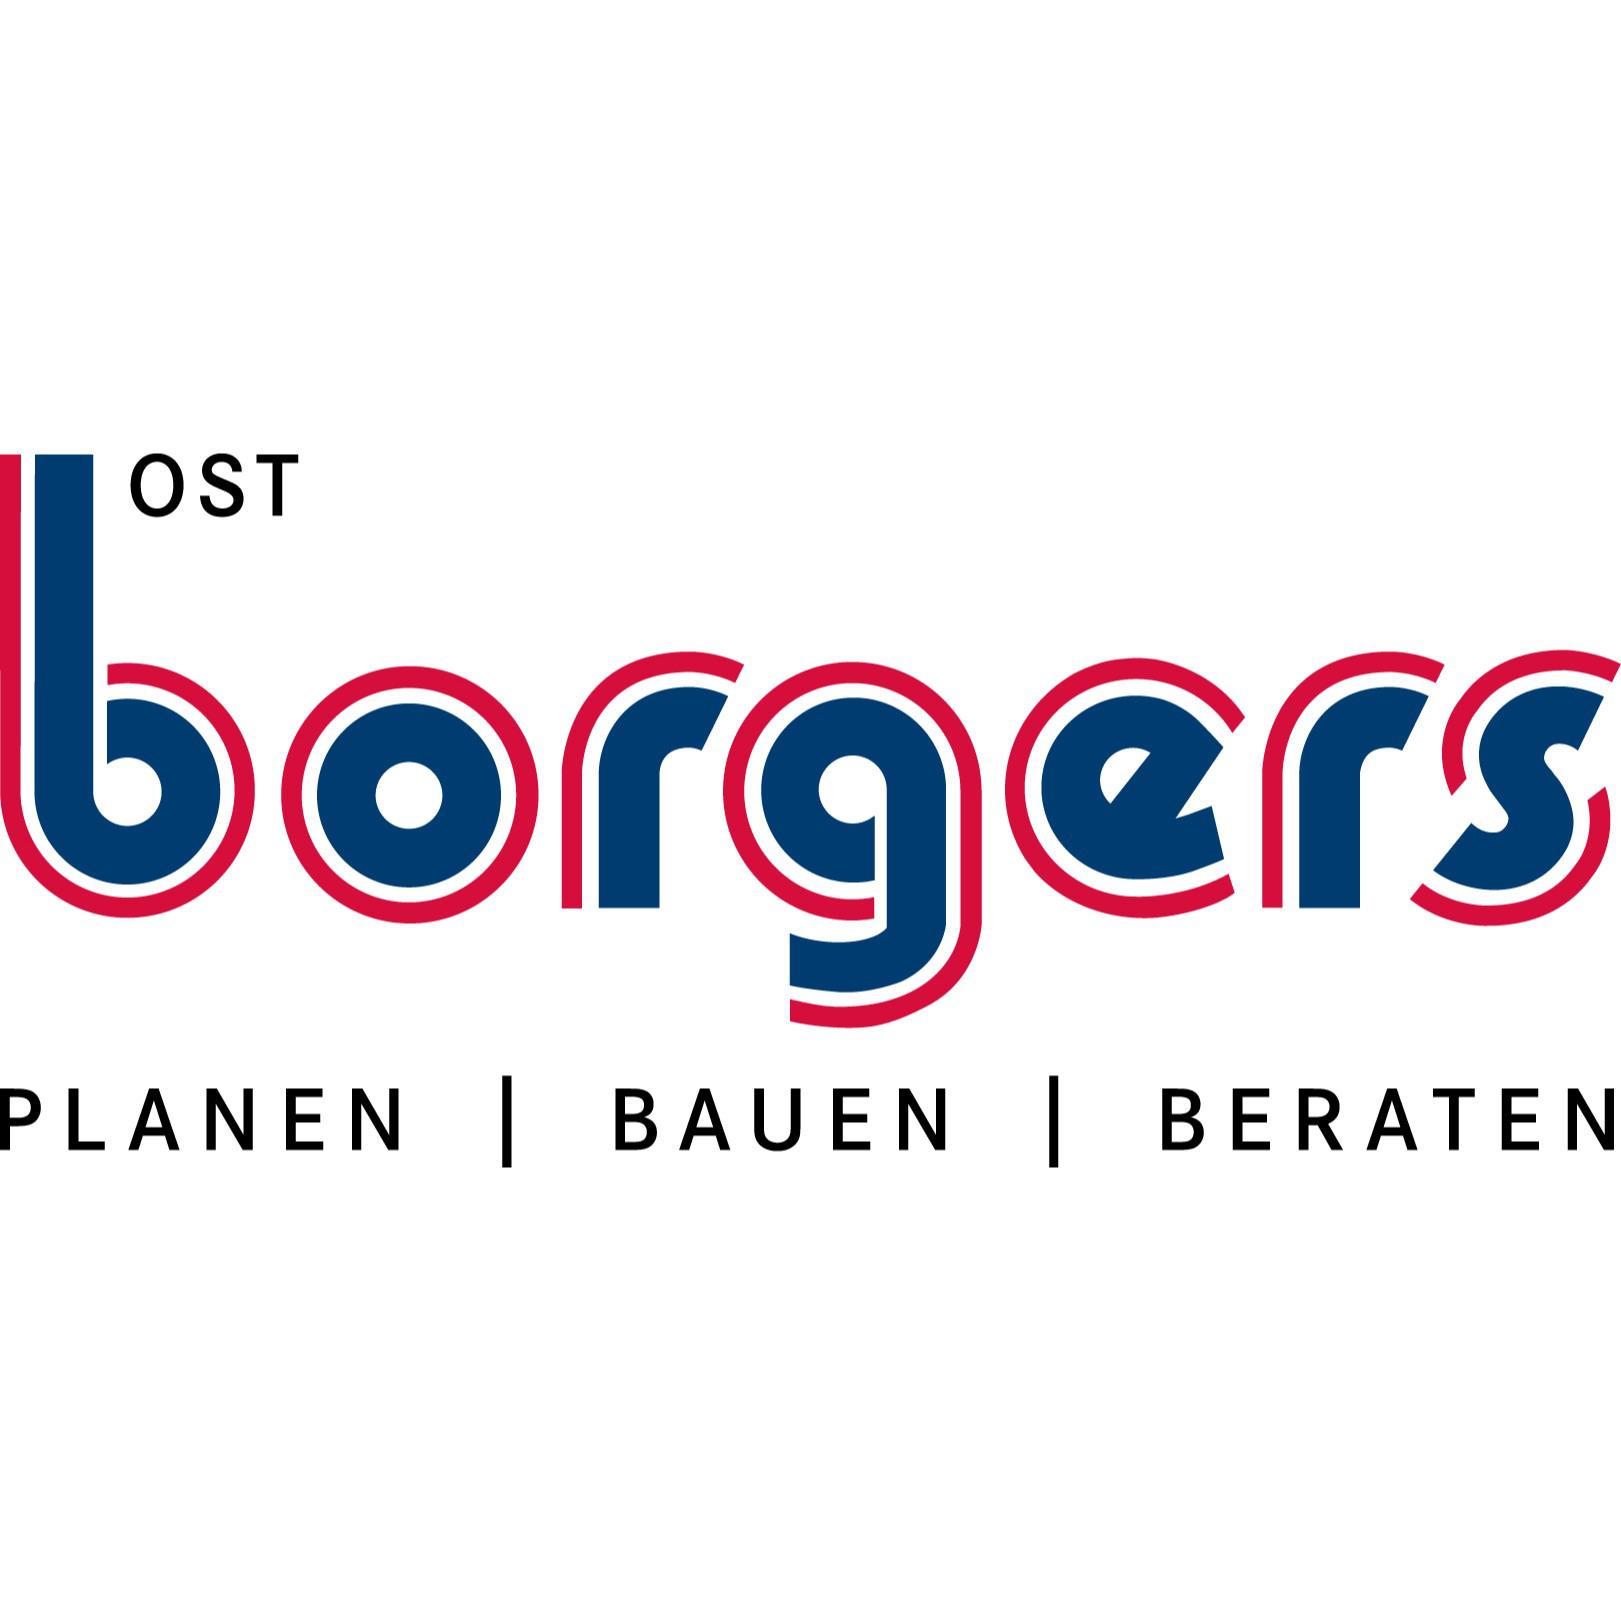 Borgers Ost GmbH in Potsdam - Logo